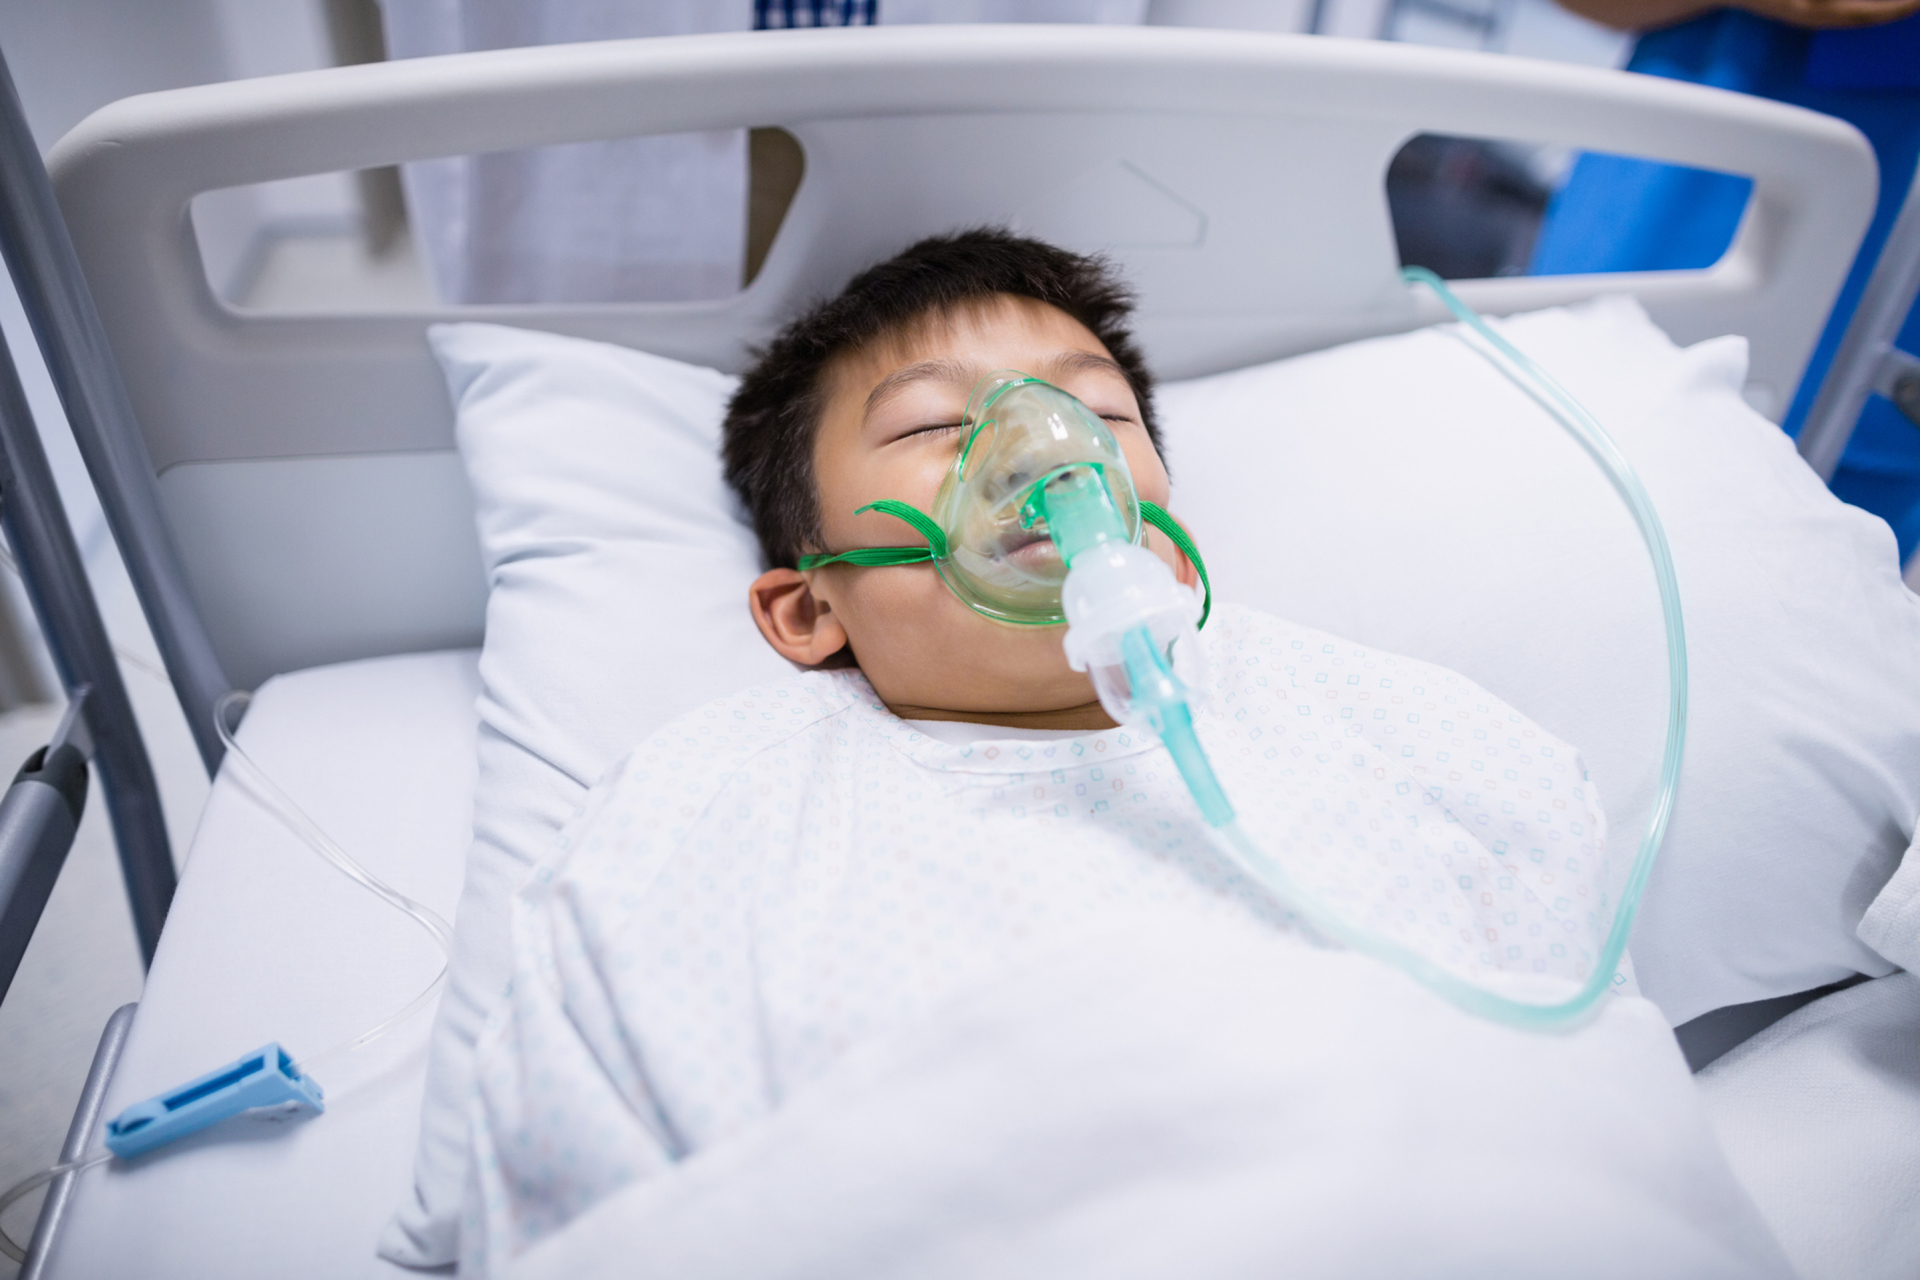 Deux cas de peste pulmonaire signalés à Pékin. © Wavebreakmedia, IStock.com